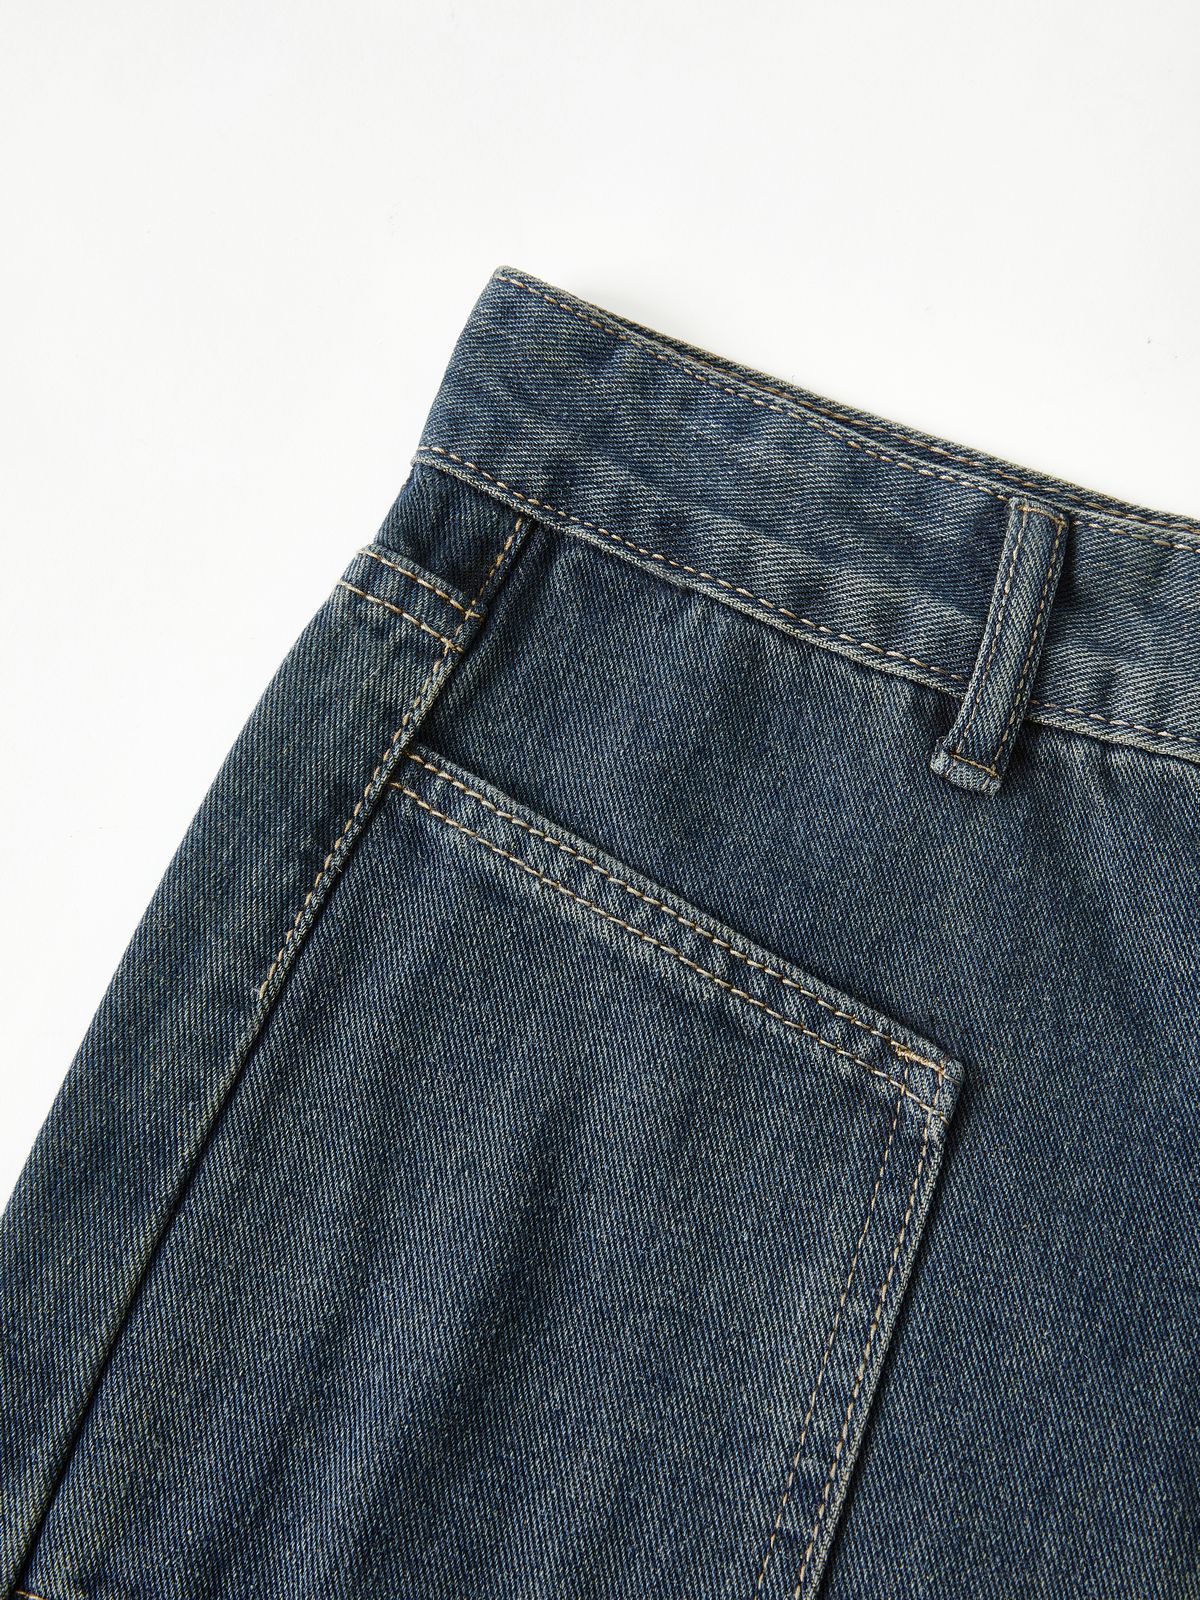 Vintage Blue Wash Boyfriend Jeans